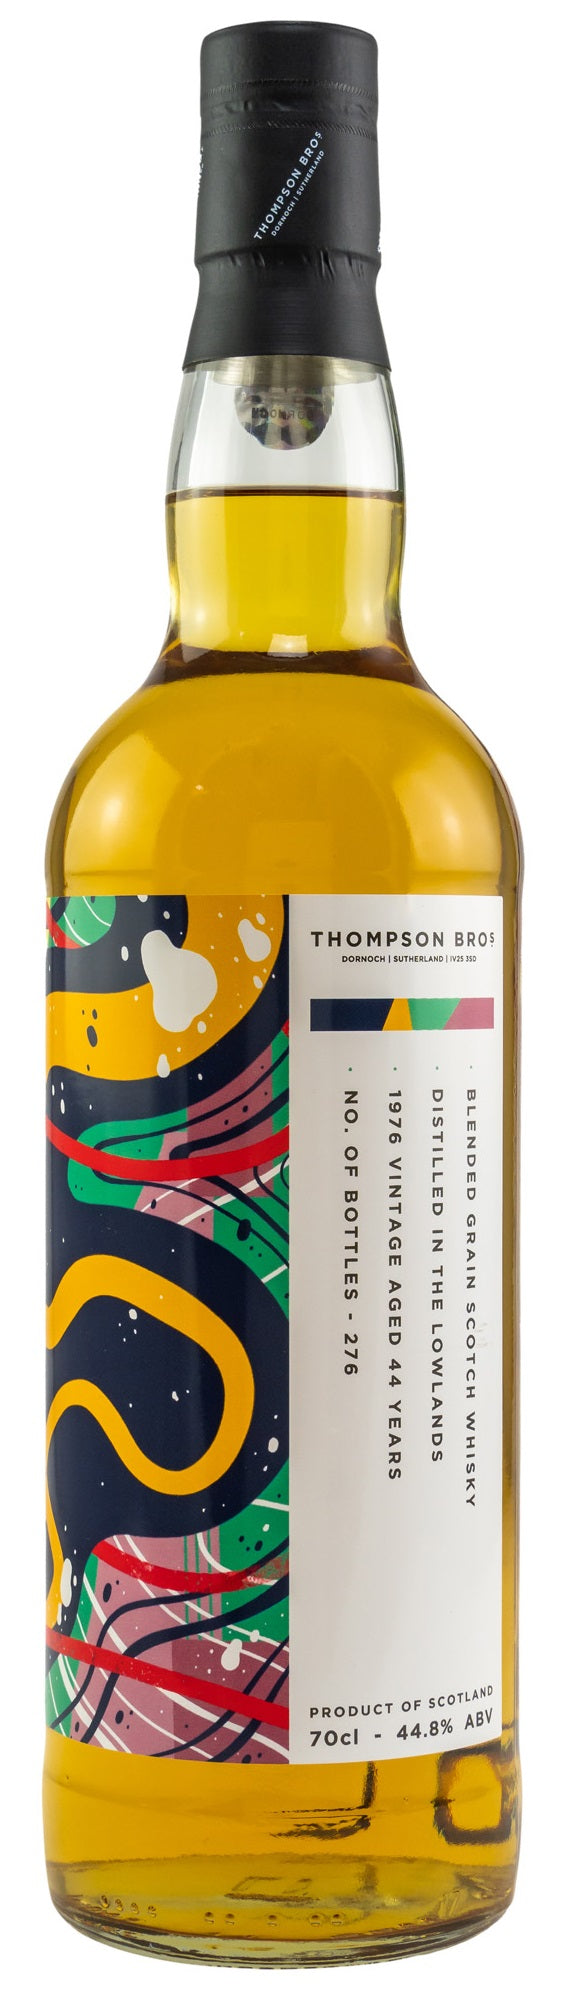 Thompson Bros Blended Grain Scotch Whiskey 1976/2021 (44 years) 44.8% Vol.